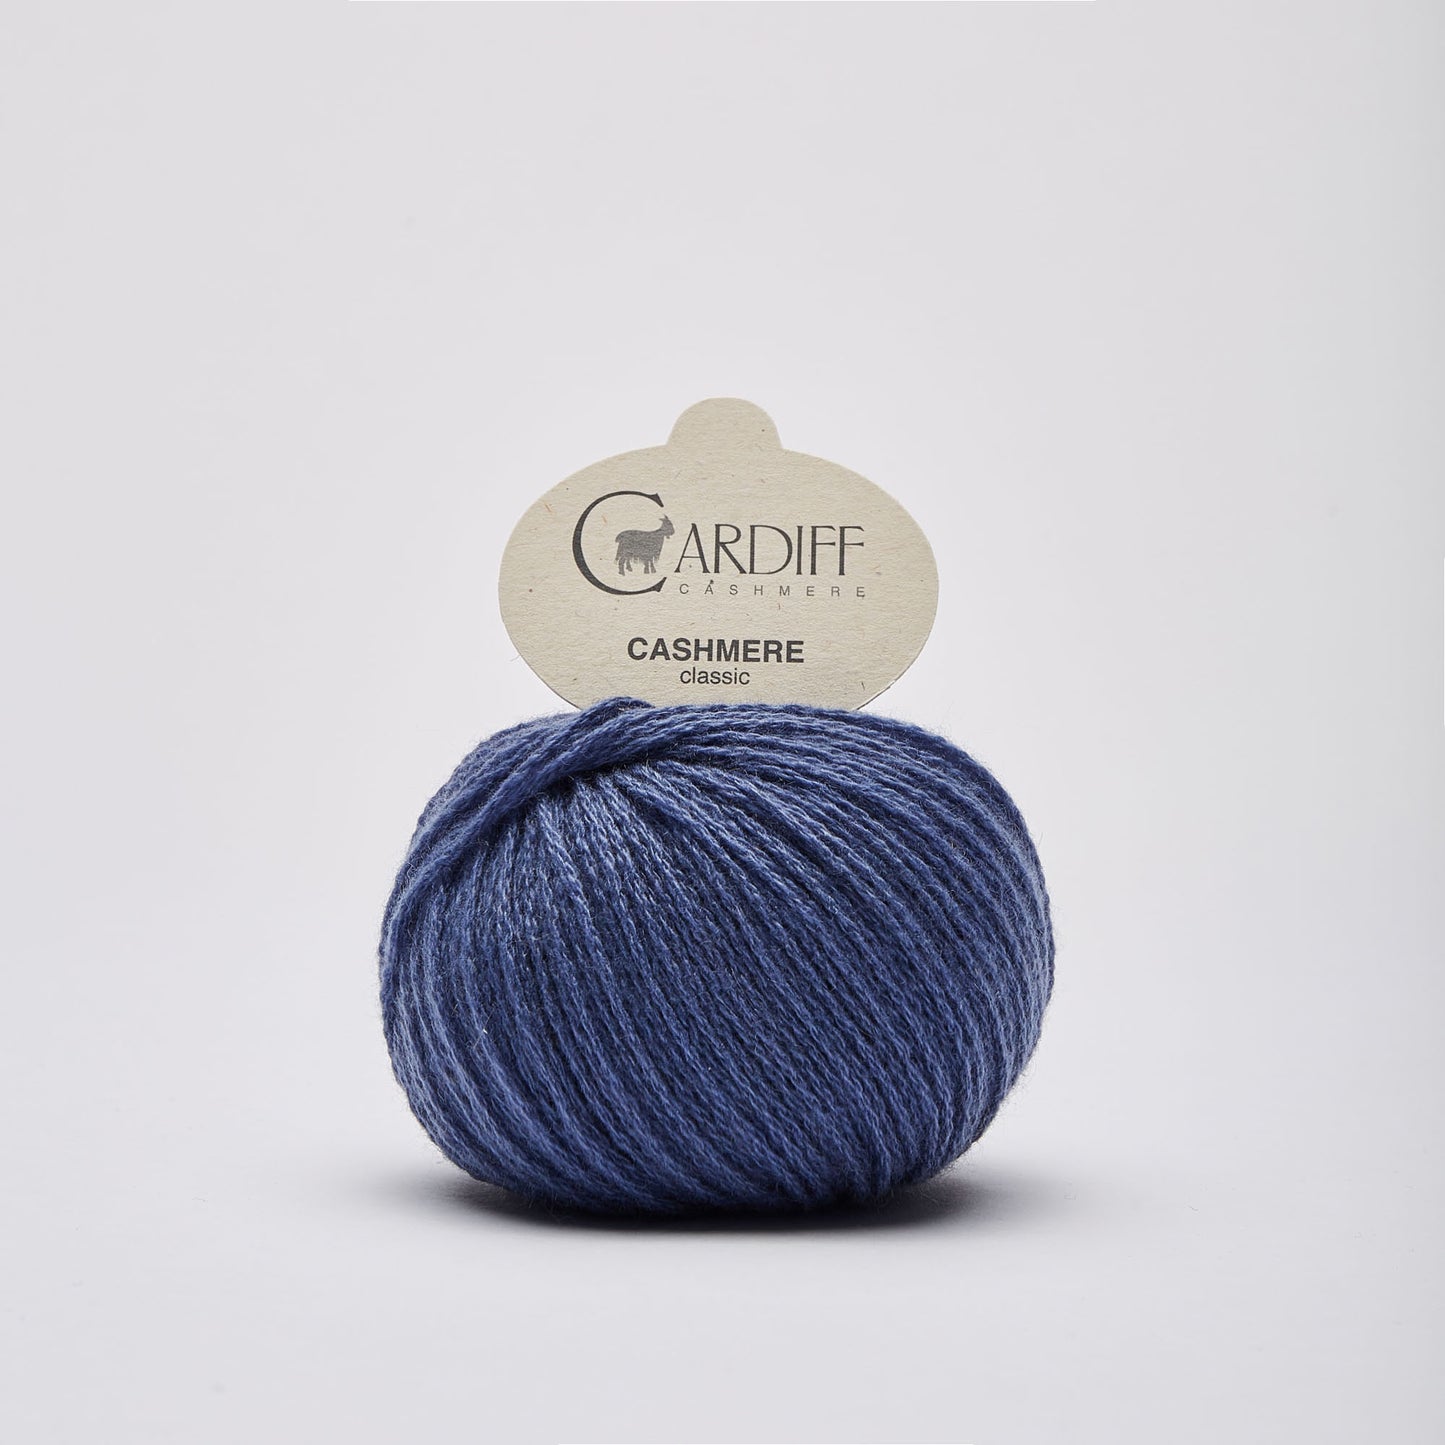 Cardiff CLASSIC gentle yarn, 544, CRISTOBAL, comp: 100% Cashmere